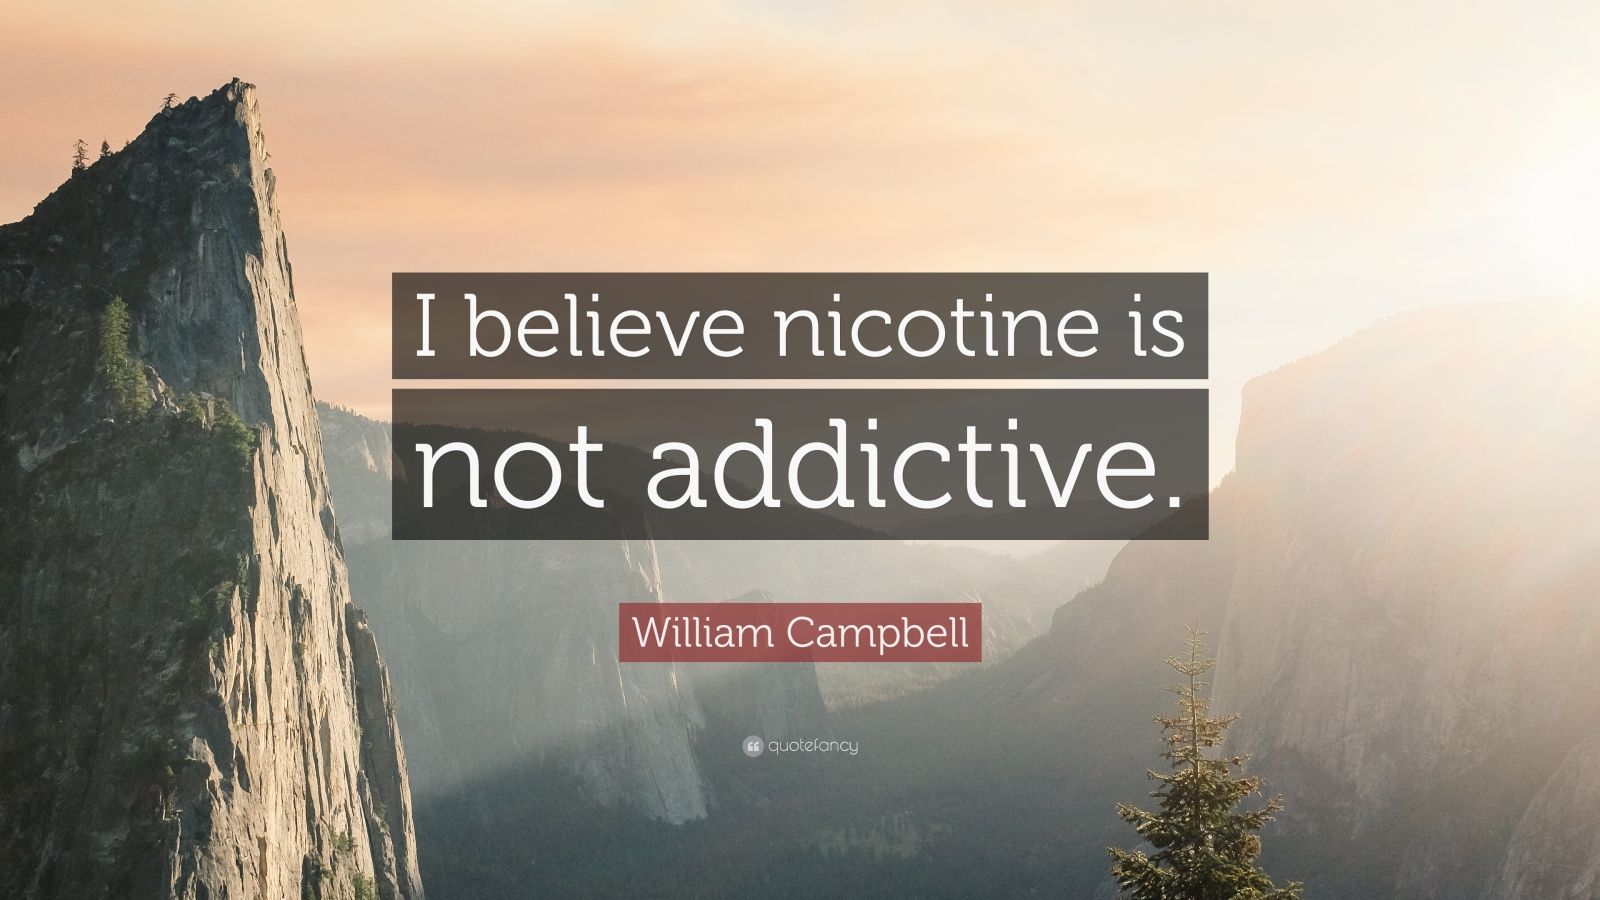 selfcontrol not addictive